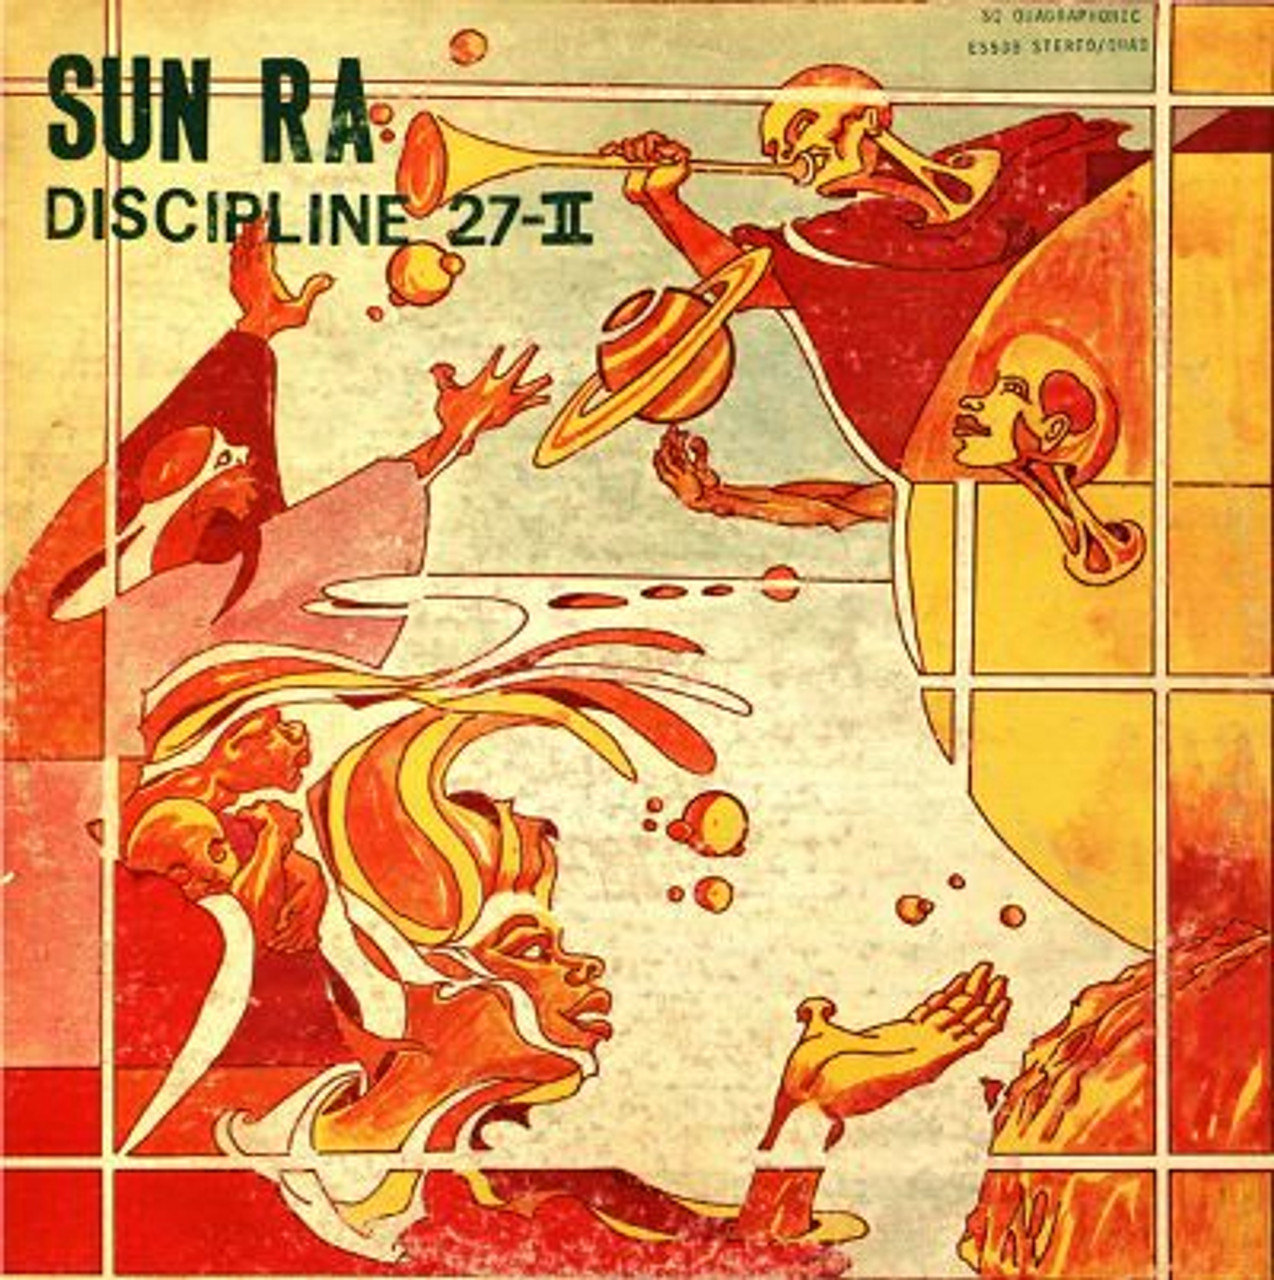 Discipline 27-II by Sun Ra